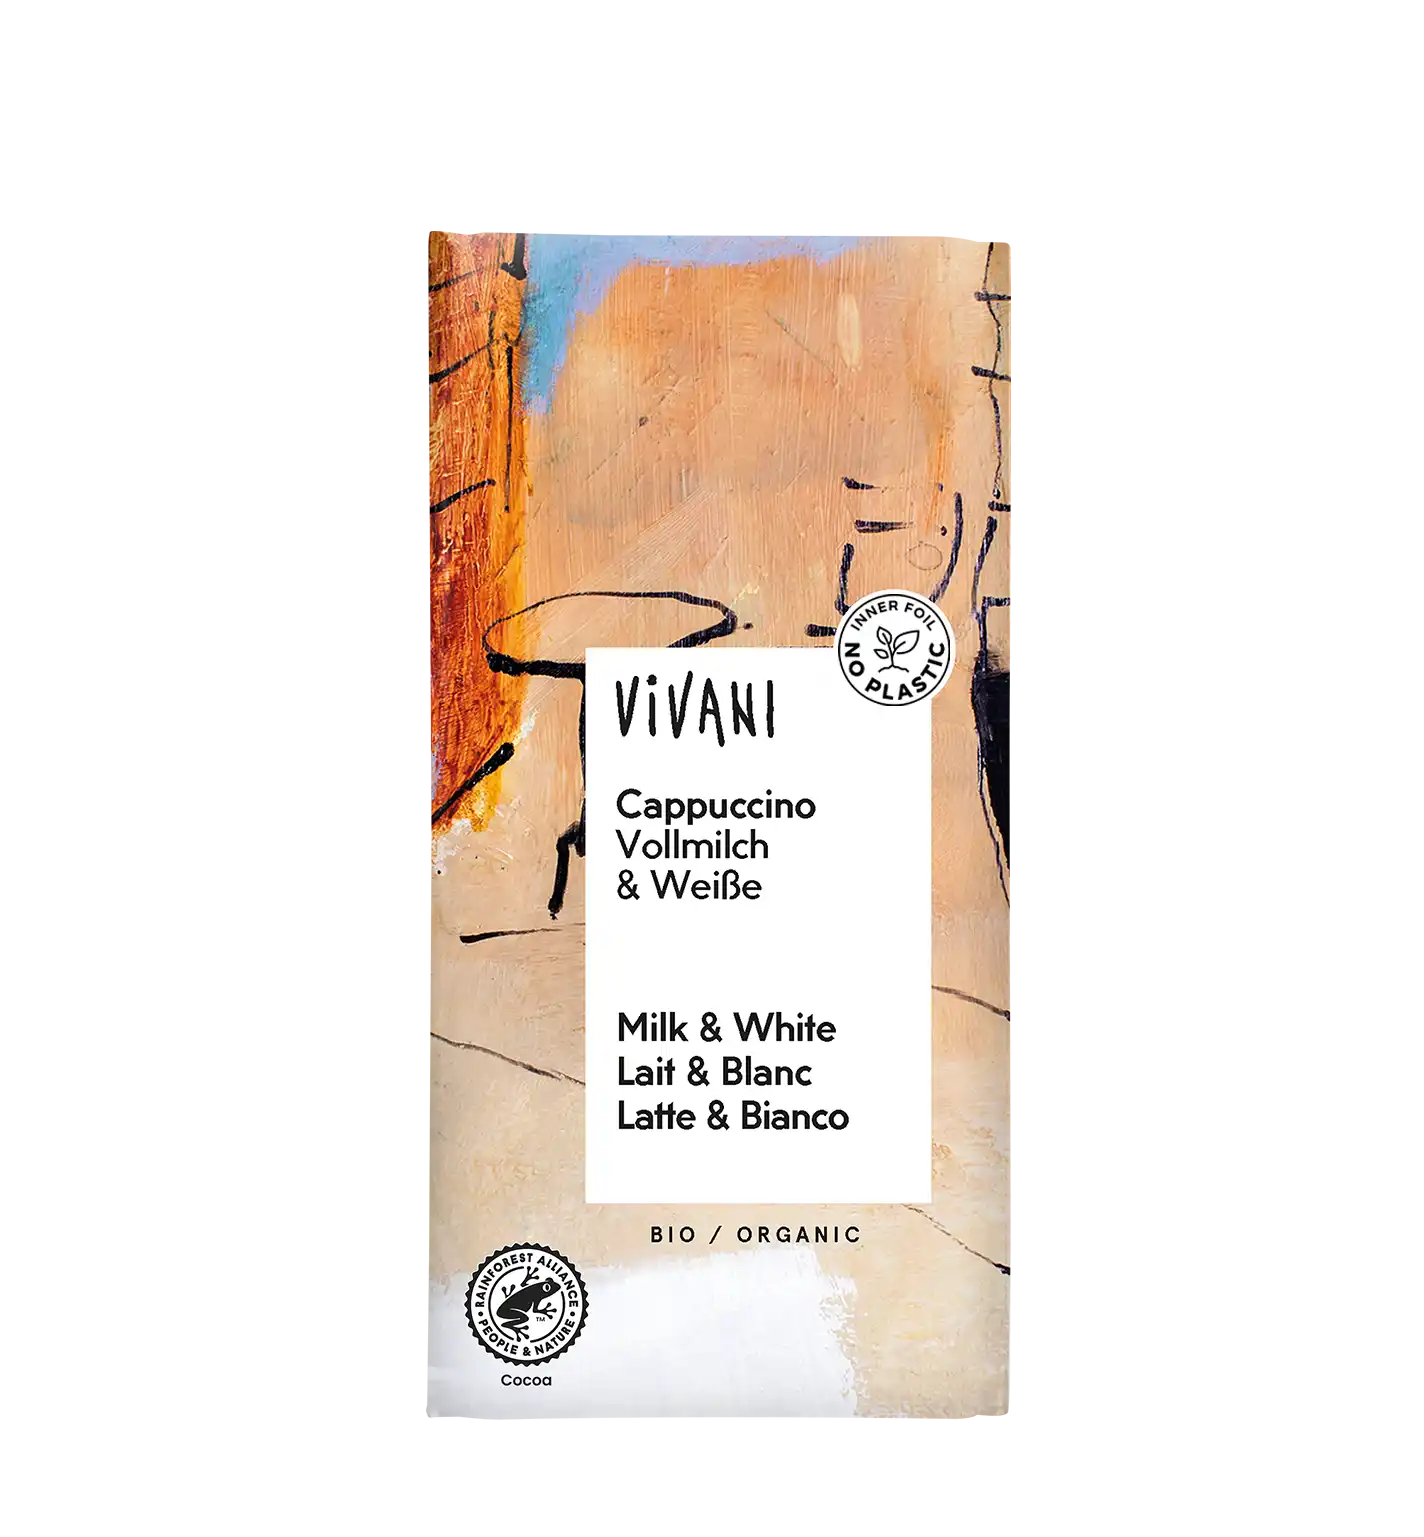 VIVANI's organic Cappuccino Chocolate has two layers - white and milk coffee chocolate